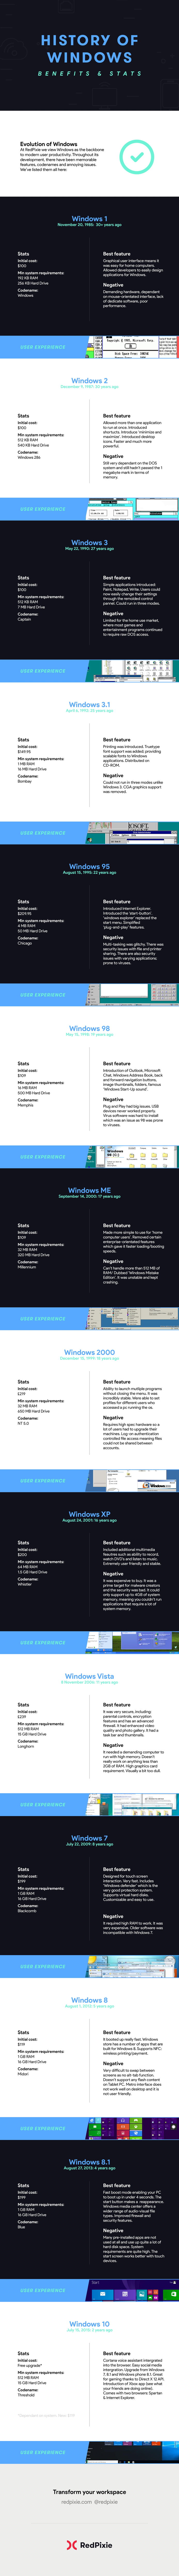 Infographic: History of Windows